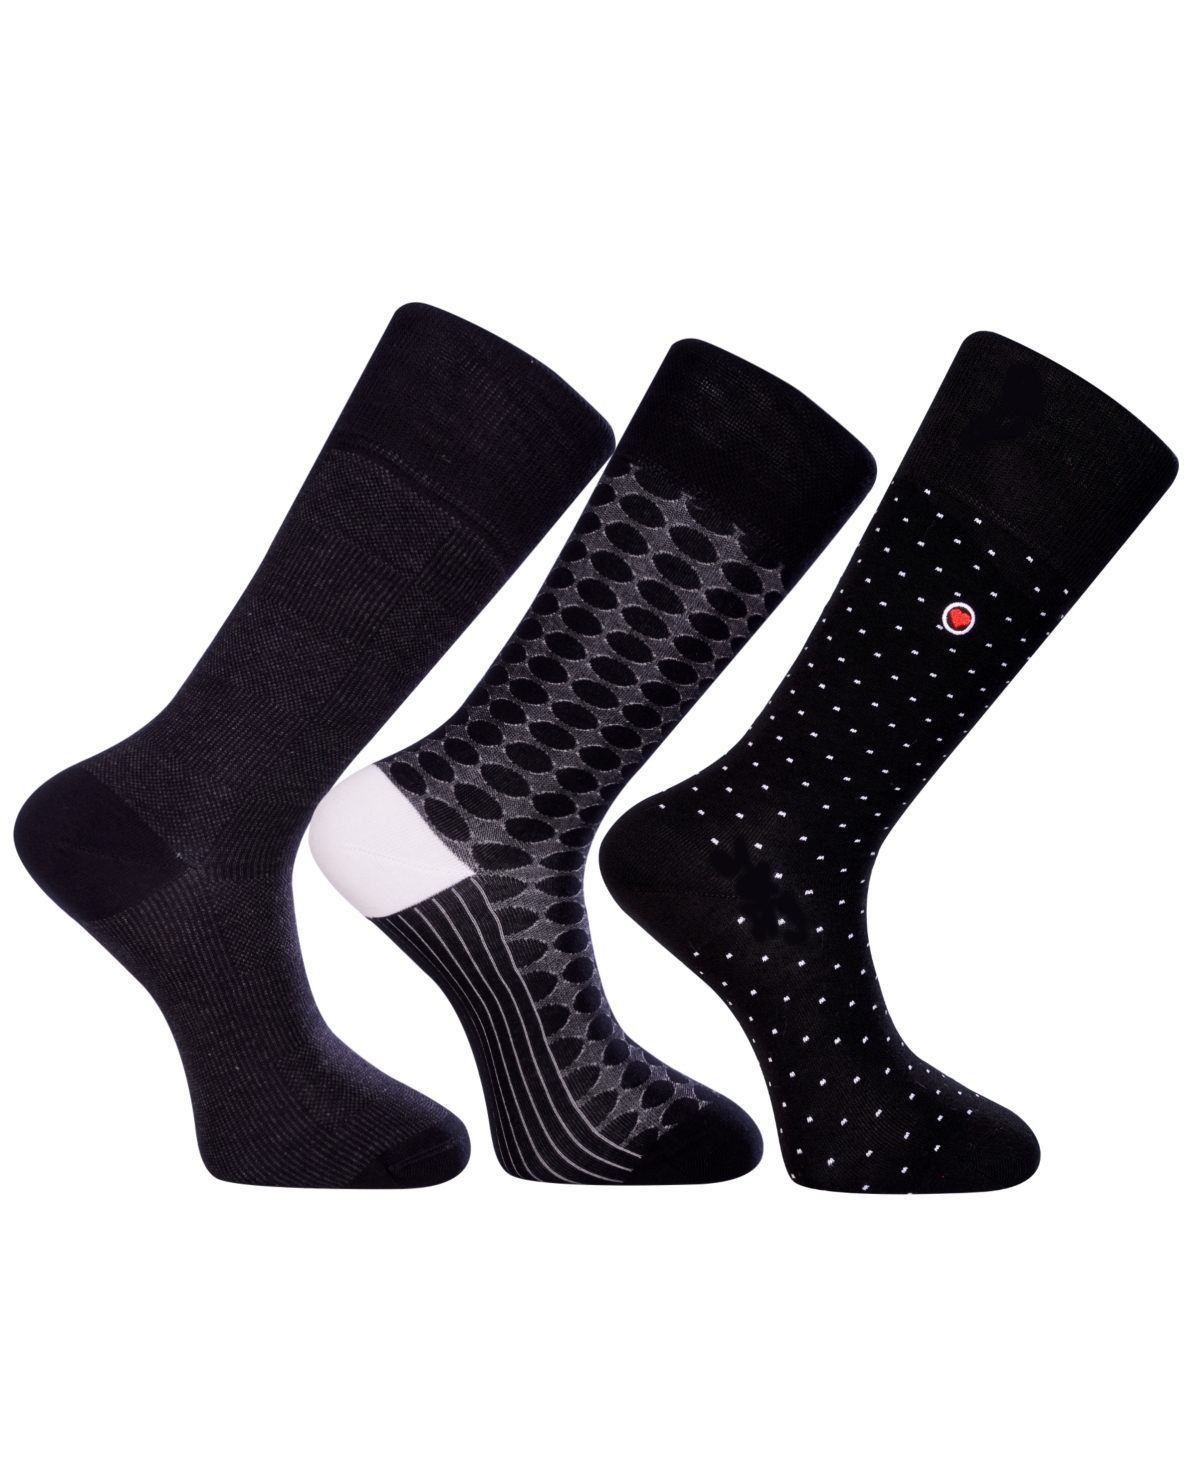 Men's Vegas Bundle Luxury Mid-Calf Dress Socks with Seamless Toe Design, Pack of 3 - Multi Color